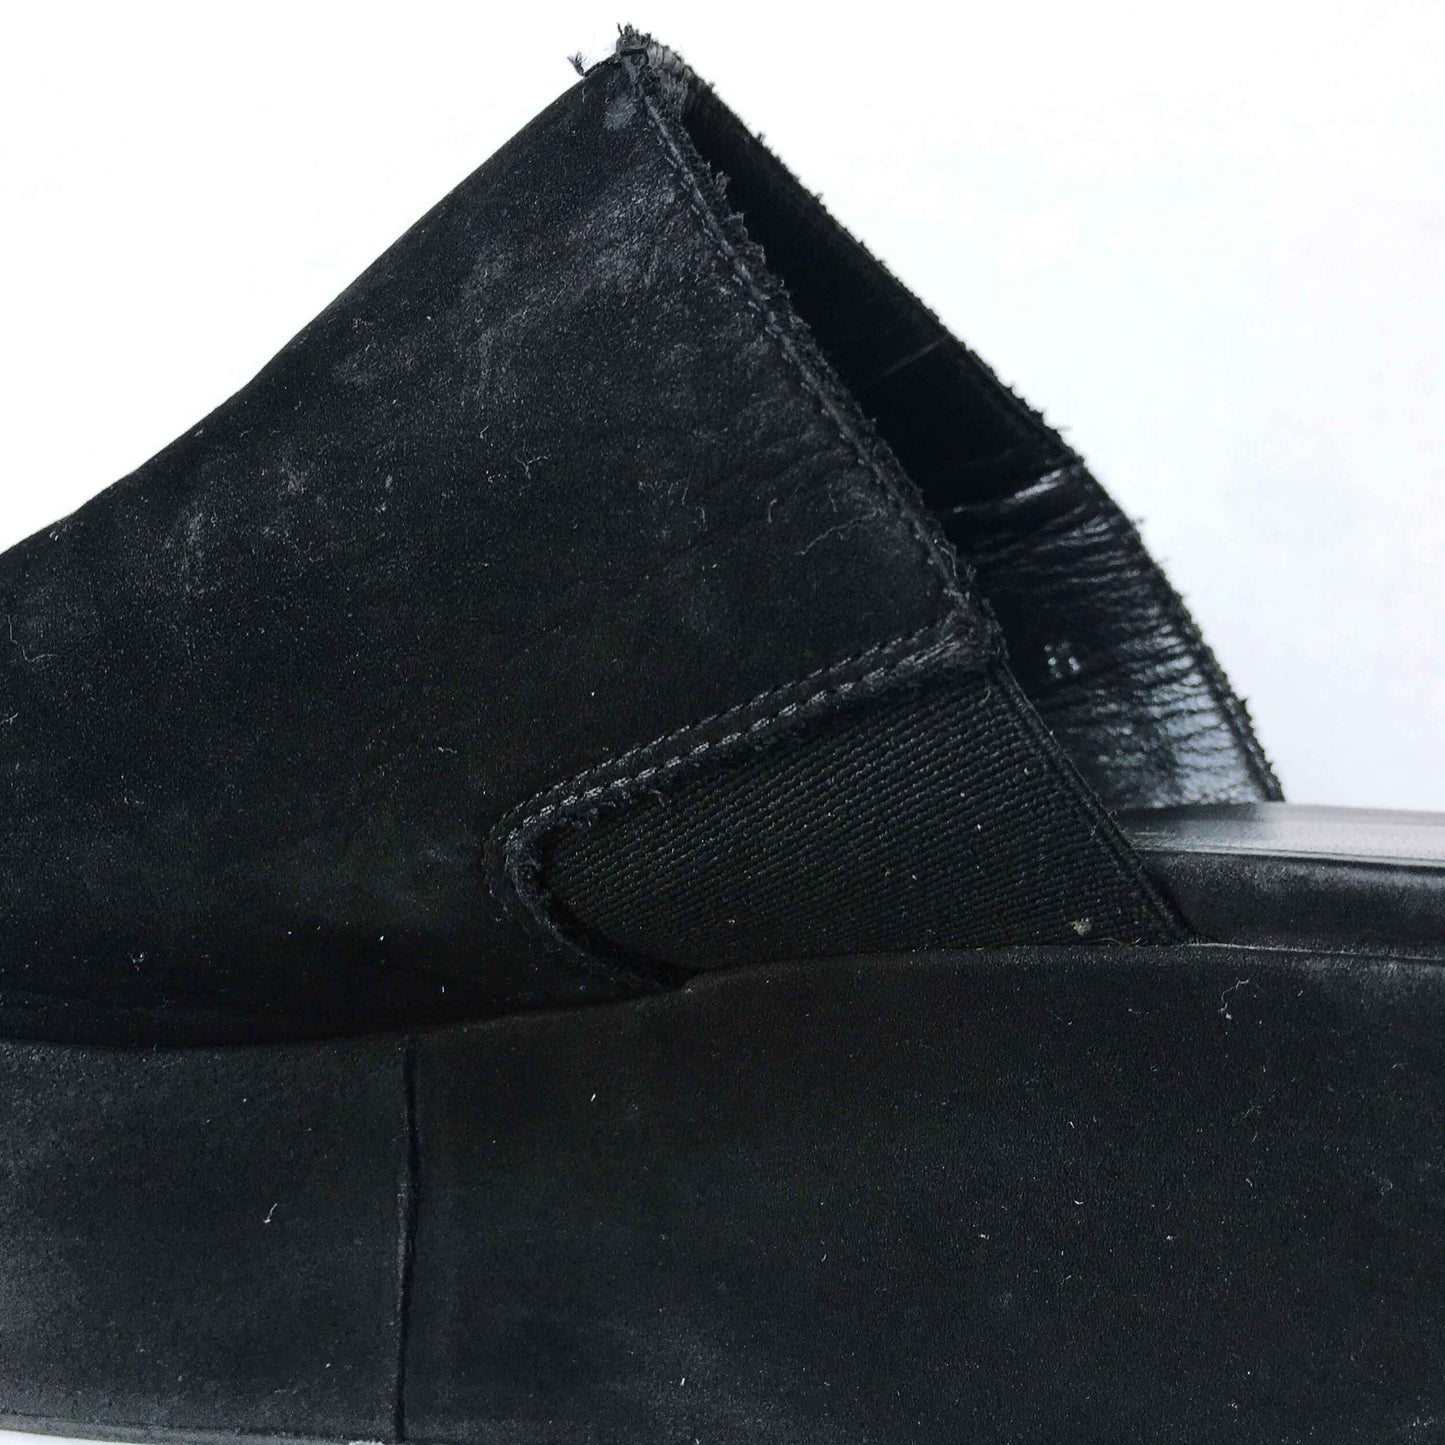 Stuart Weitzman Flatout leather platform Slides - size 8